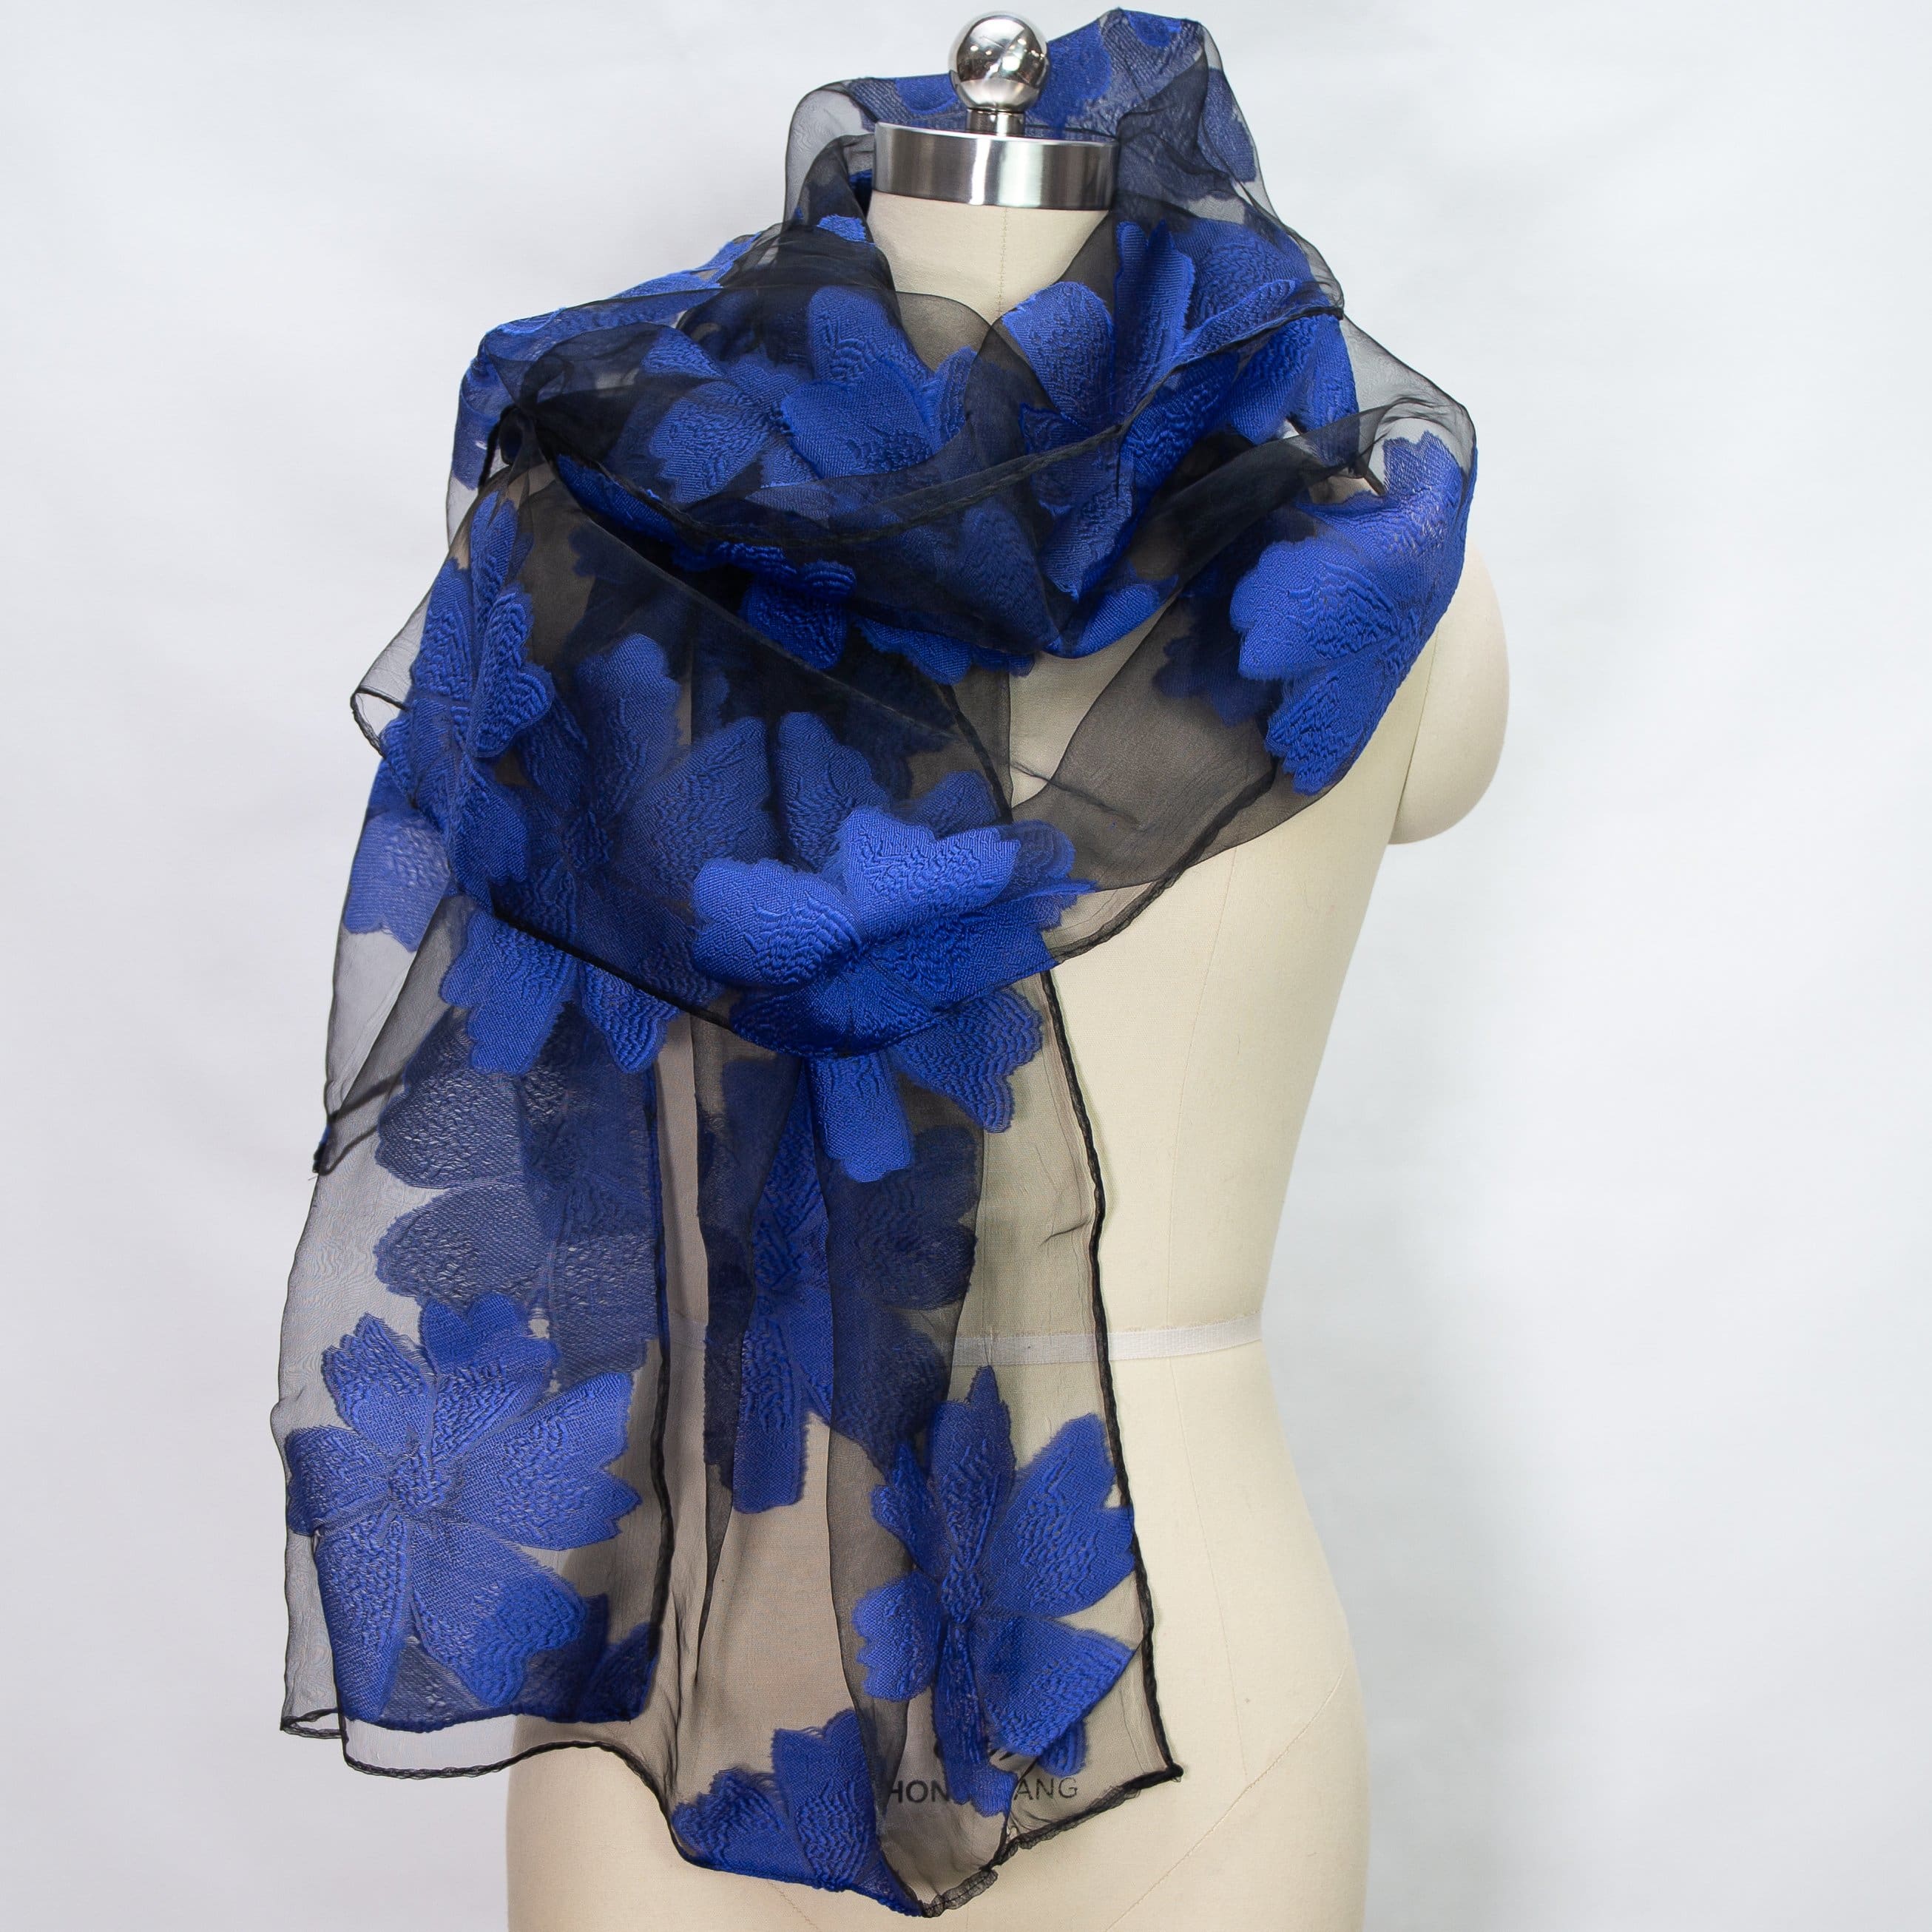 Soacha Tørklæde - Blå - Tørklæde